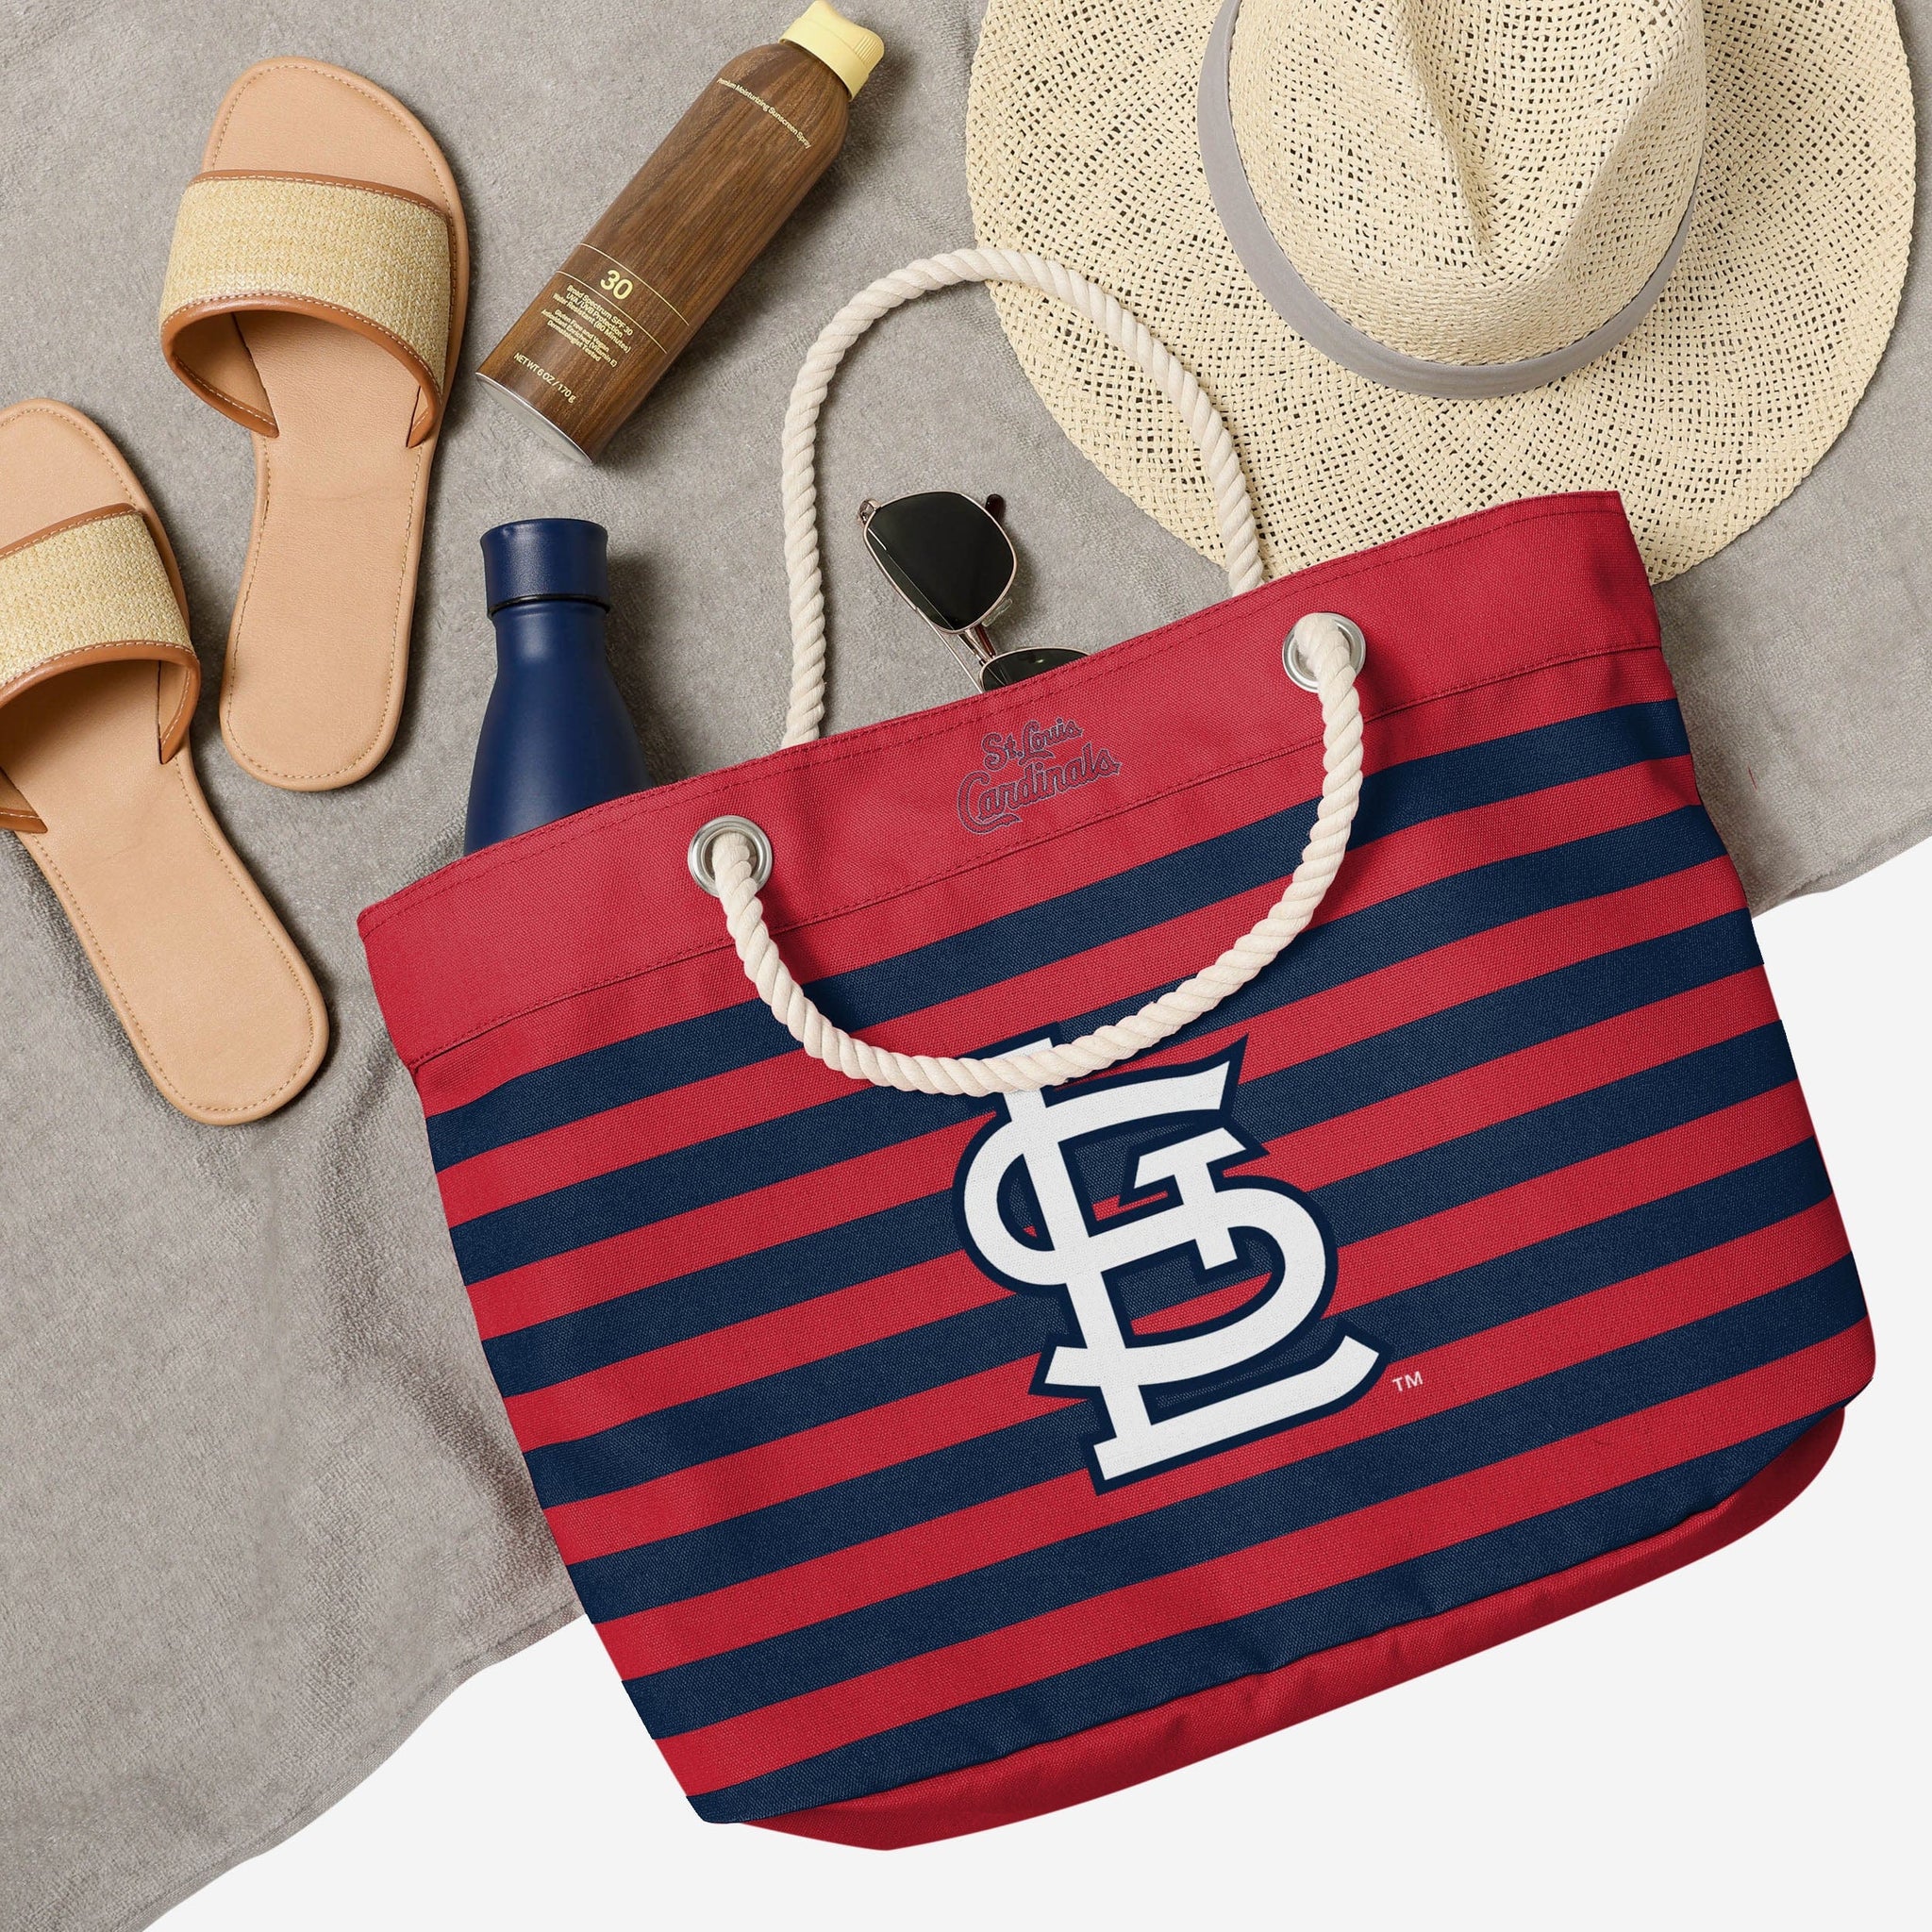 St. Louis Cardinals purse/handbag  Purses and handbags, Handbag, Purses